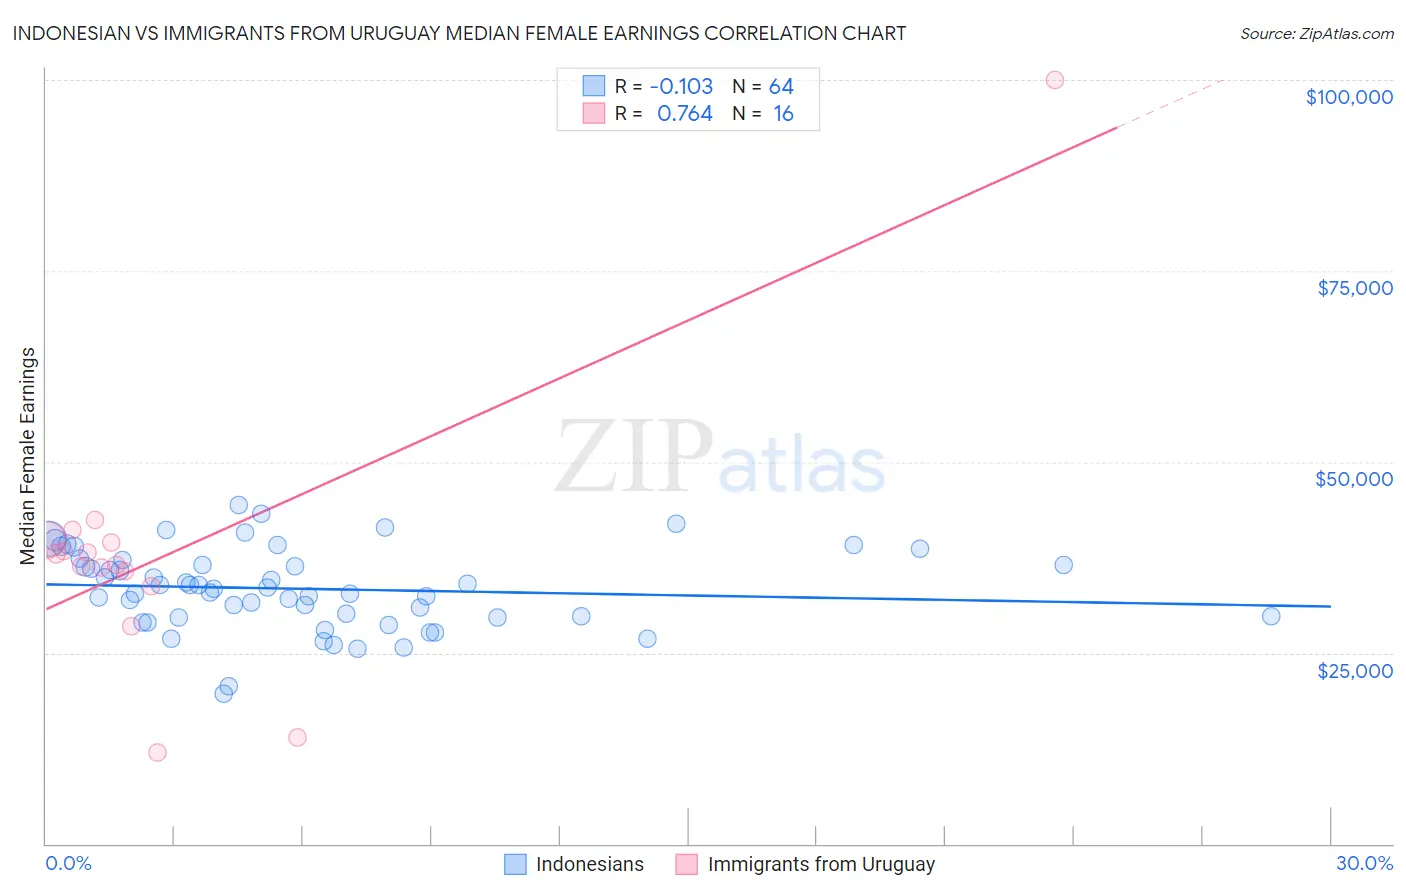 Indonesian vs Immigrants from Uruguay Median Female Earnings